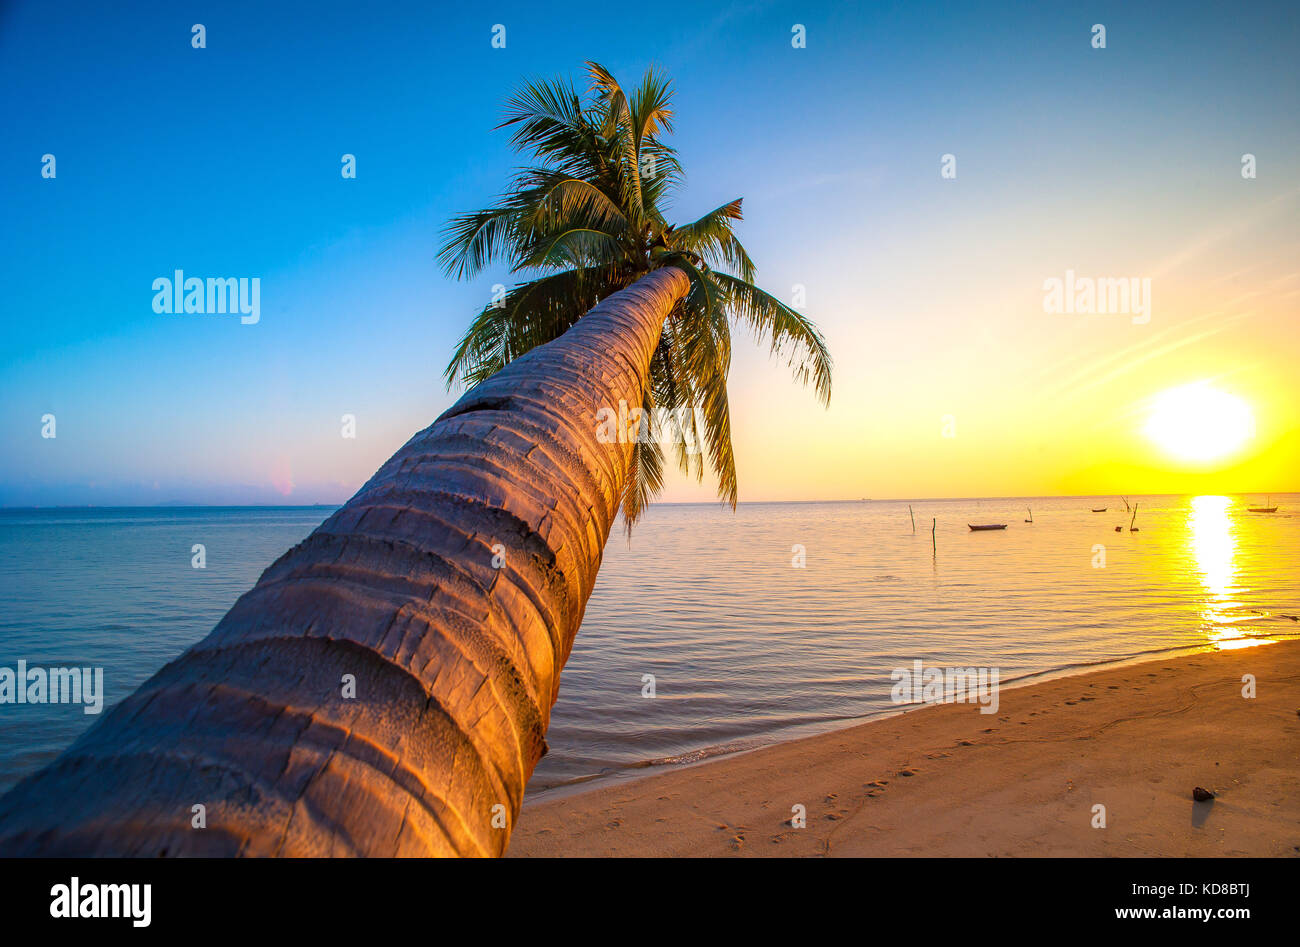 Low angle view of a leaning palm tree on beach, Batam Island, Riau Islands, Indonesia Stock Photo